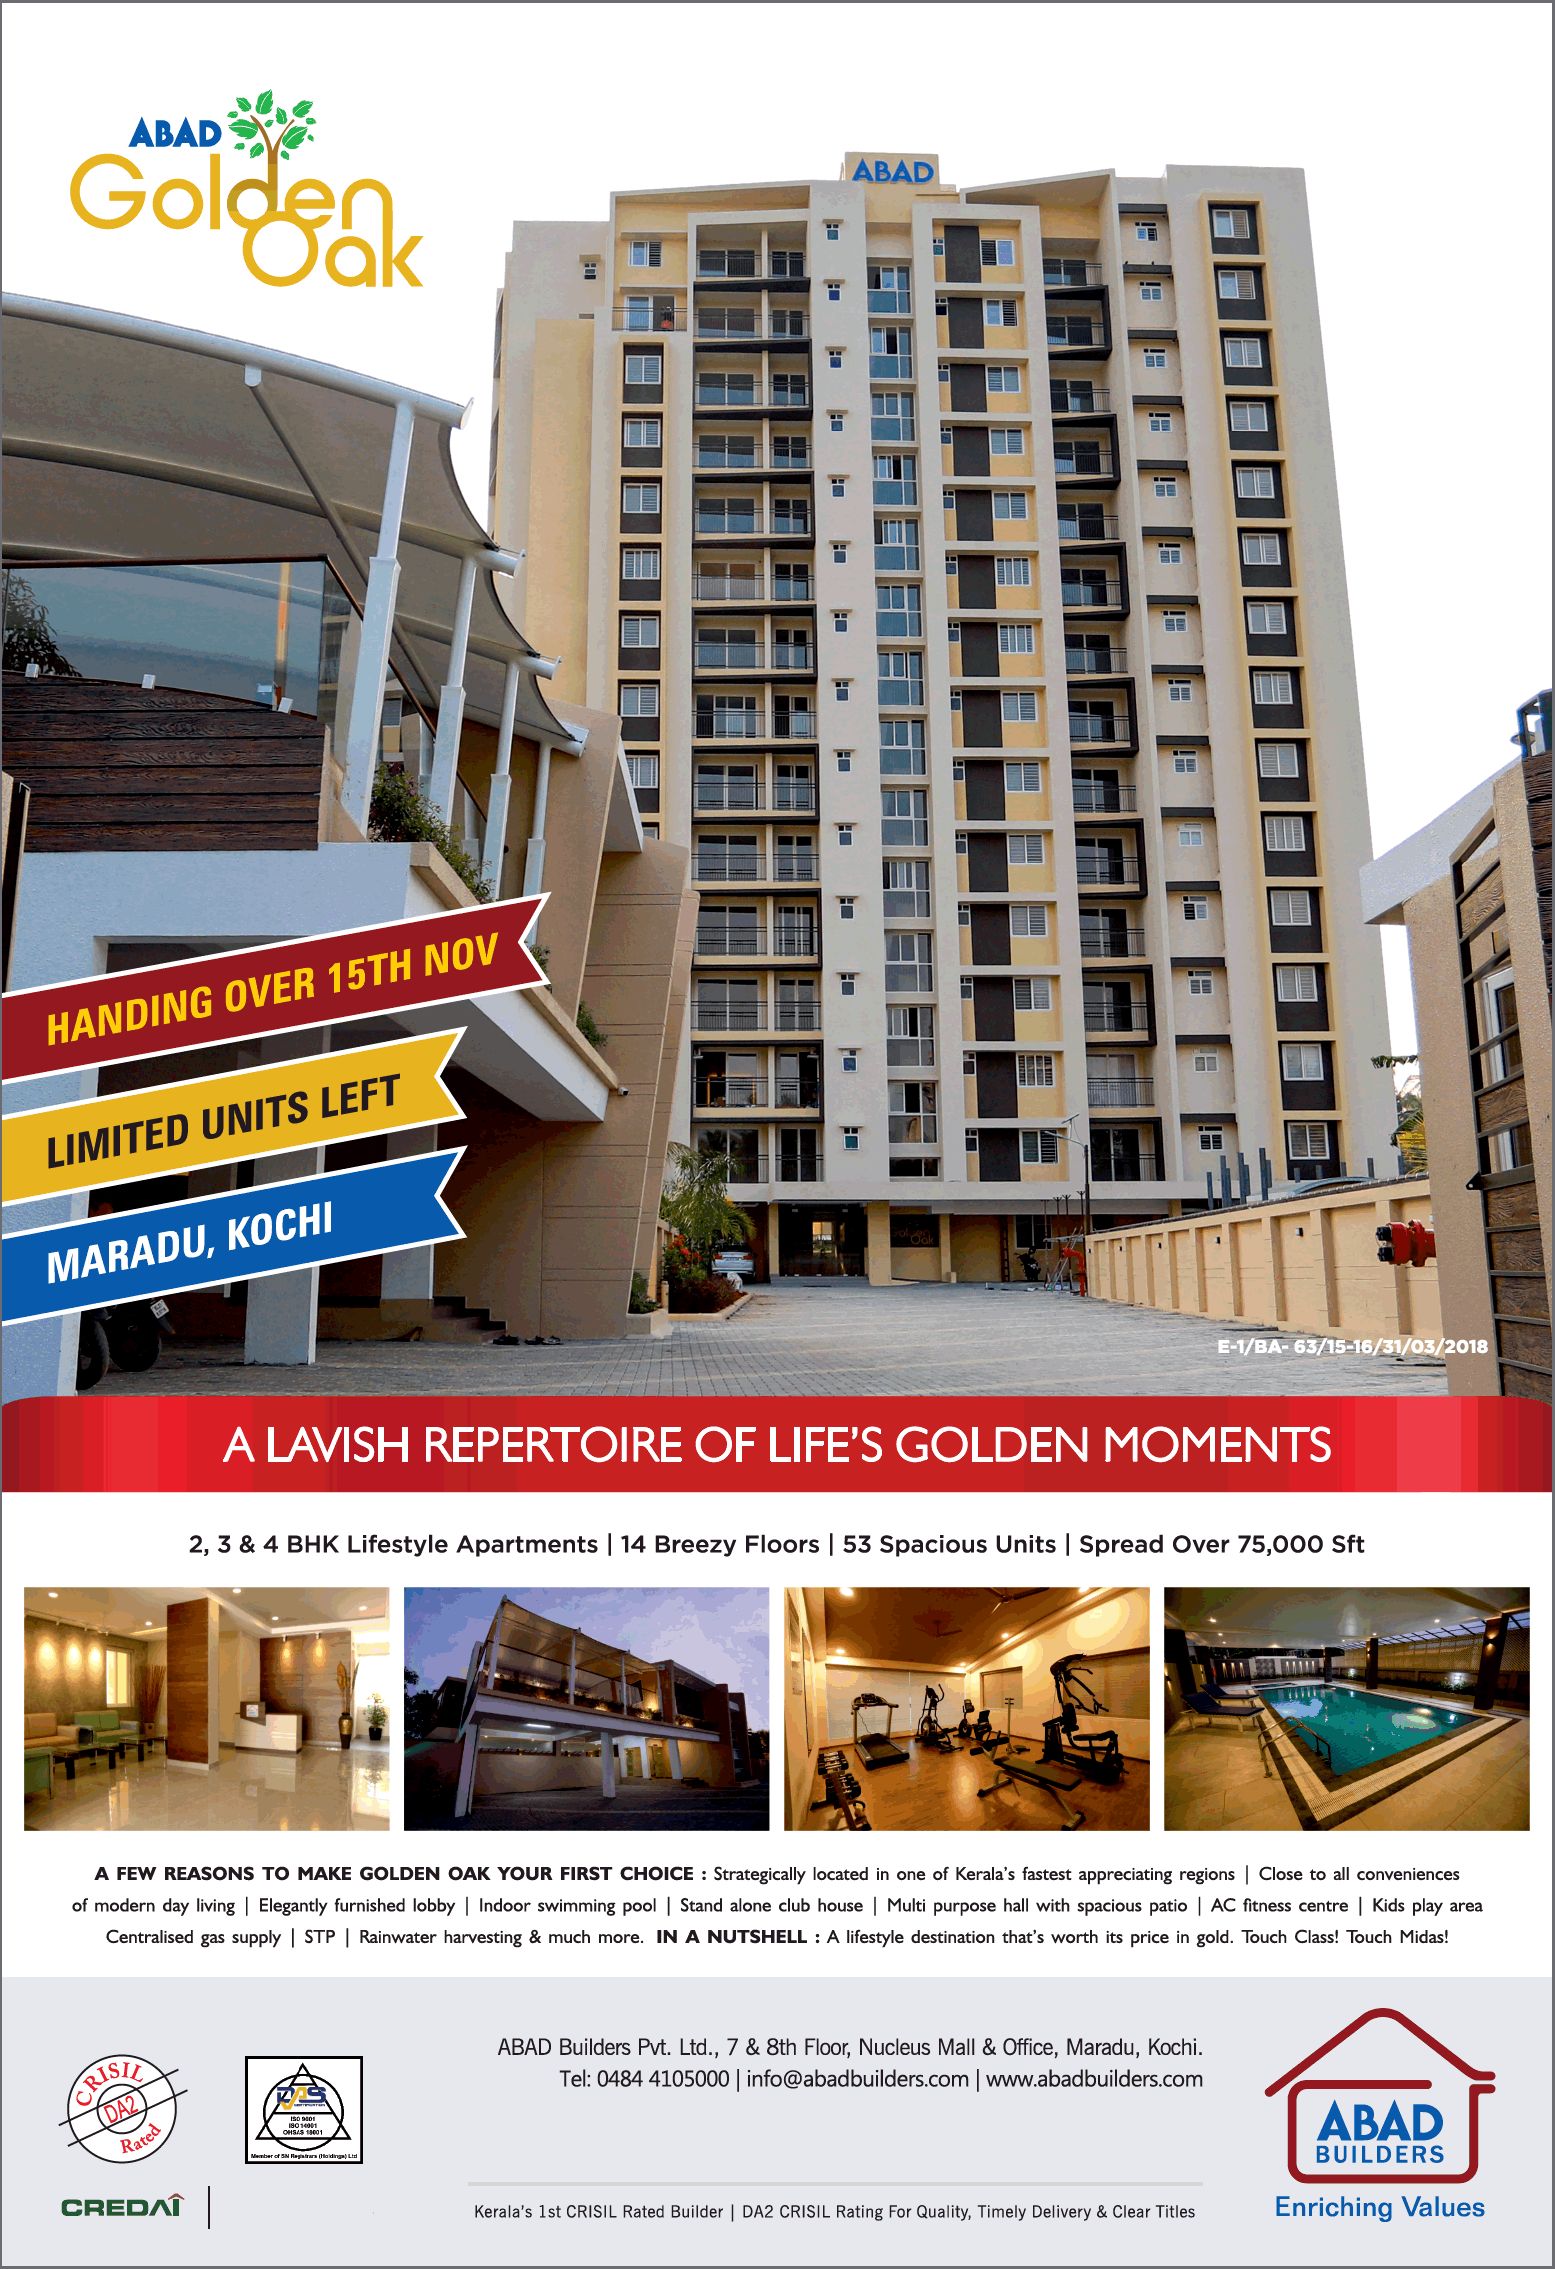 Book 2, 3 & 4 BHK lifestyle apartments at ABAD Golden Oak, Kochi